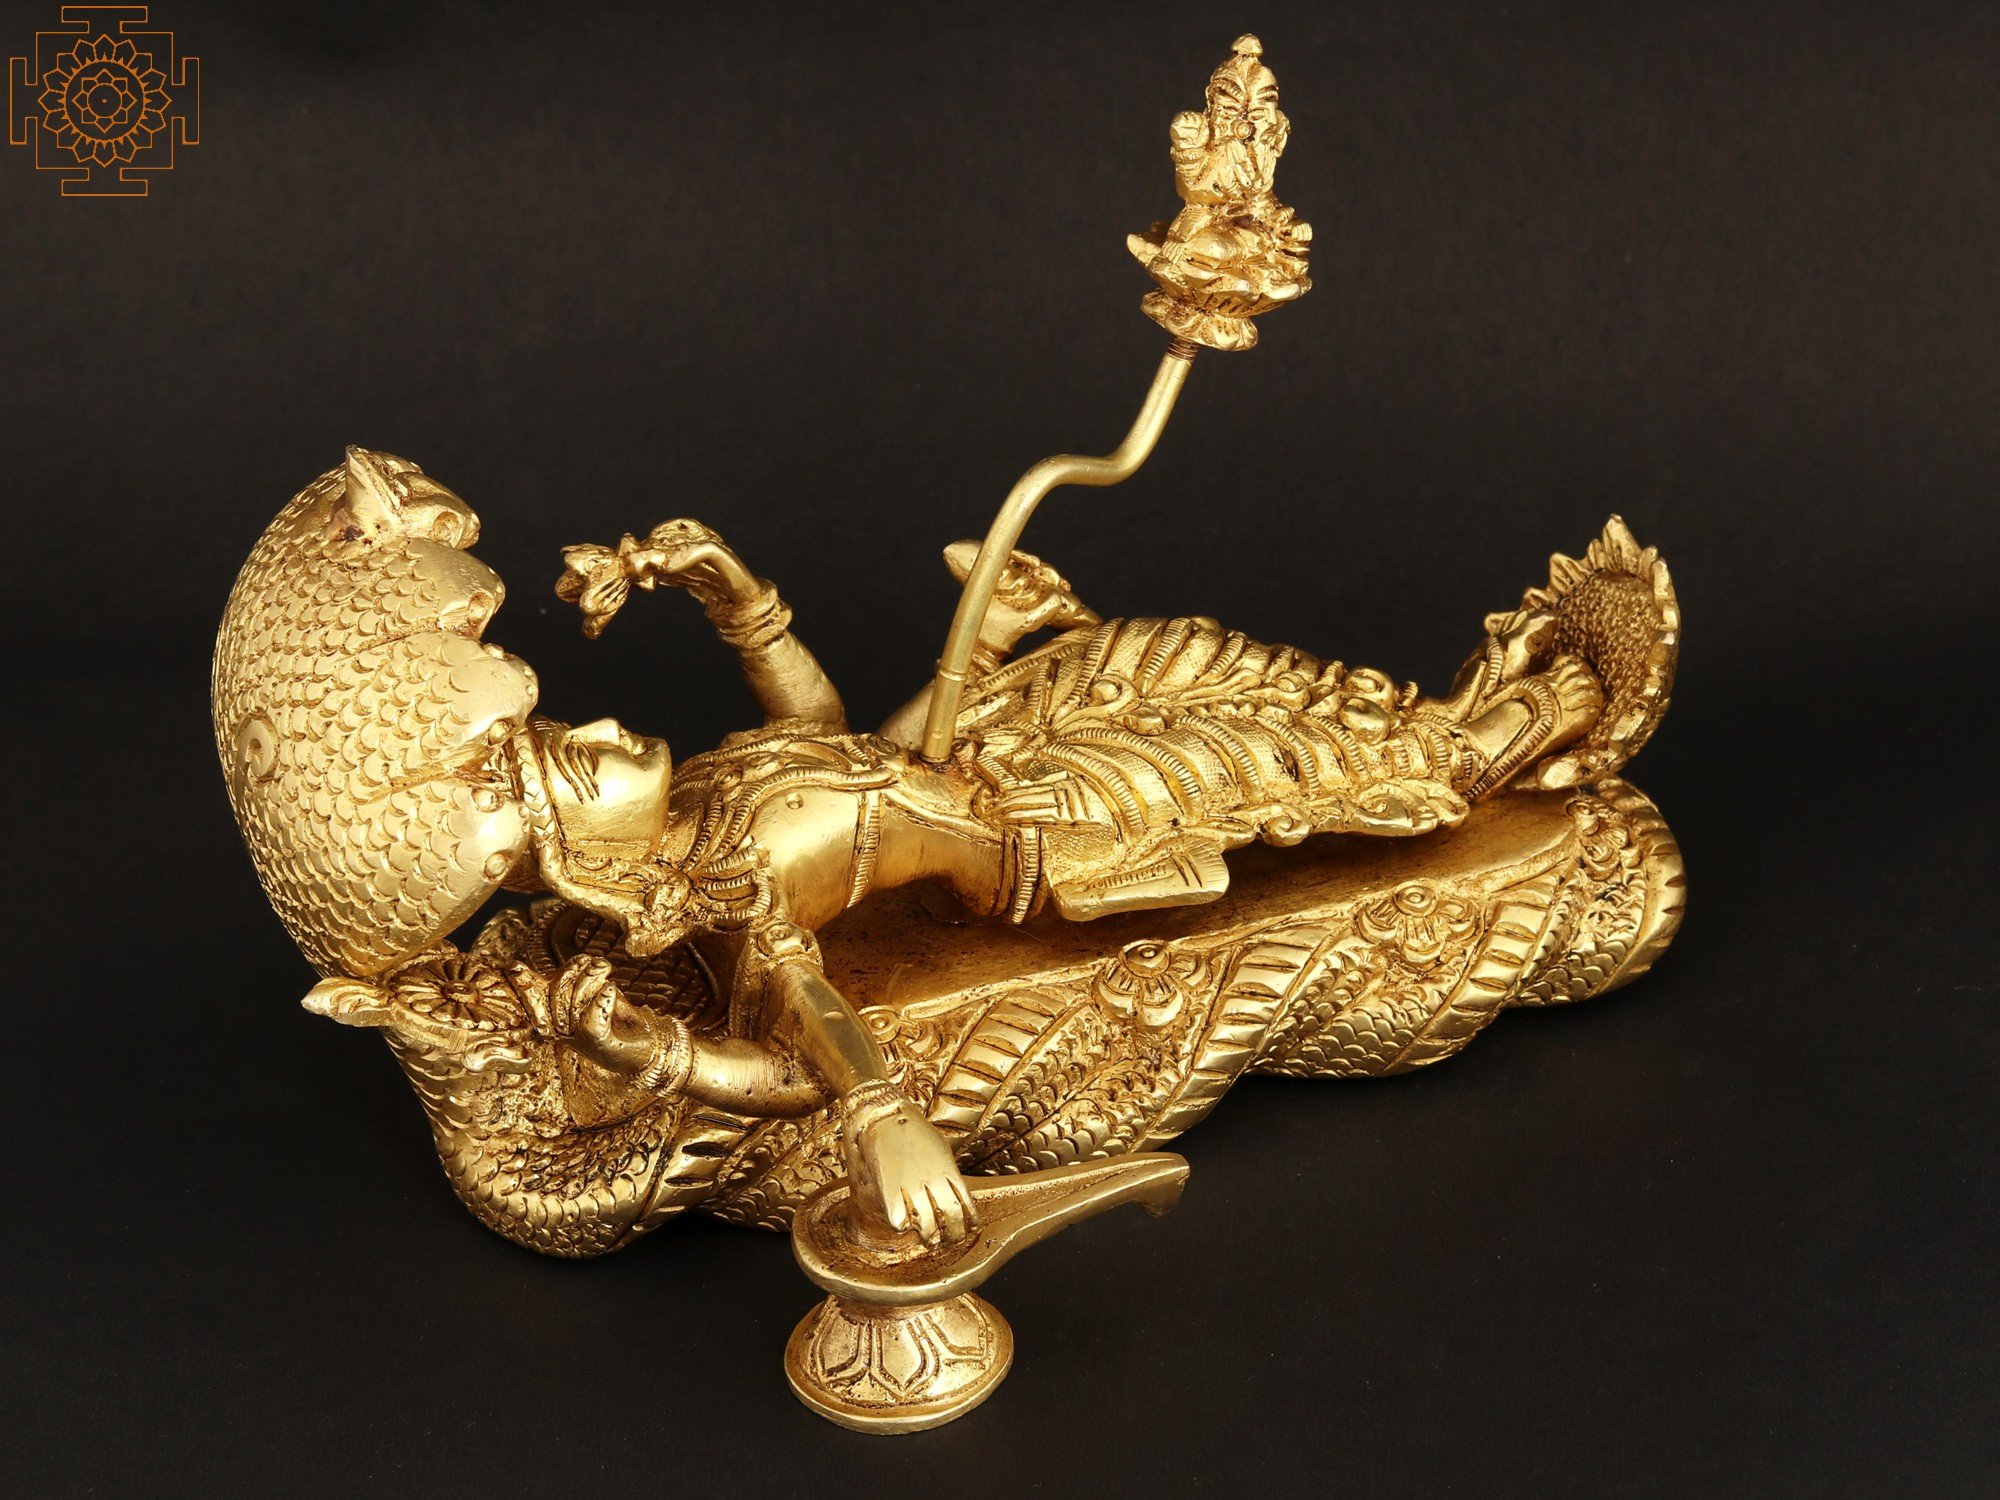 Budanilkantha: Discovering the Mythical Beauty of the Sleeping Vishnu